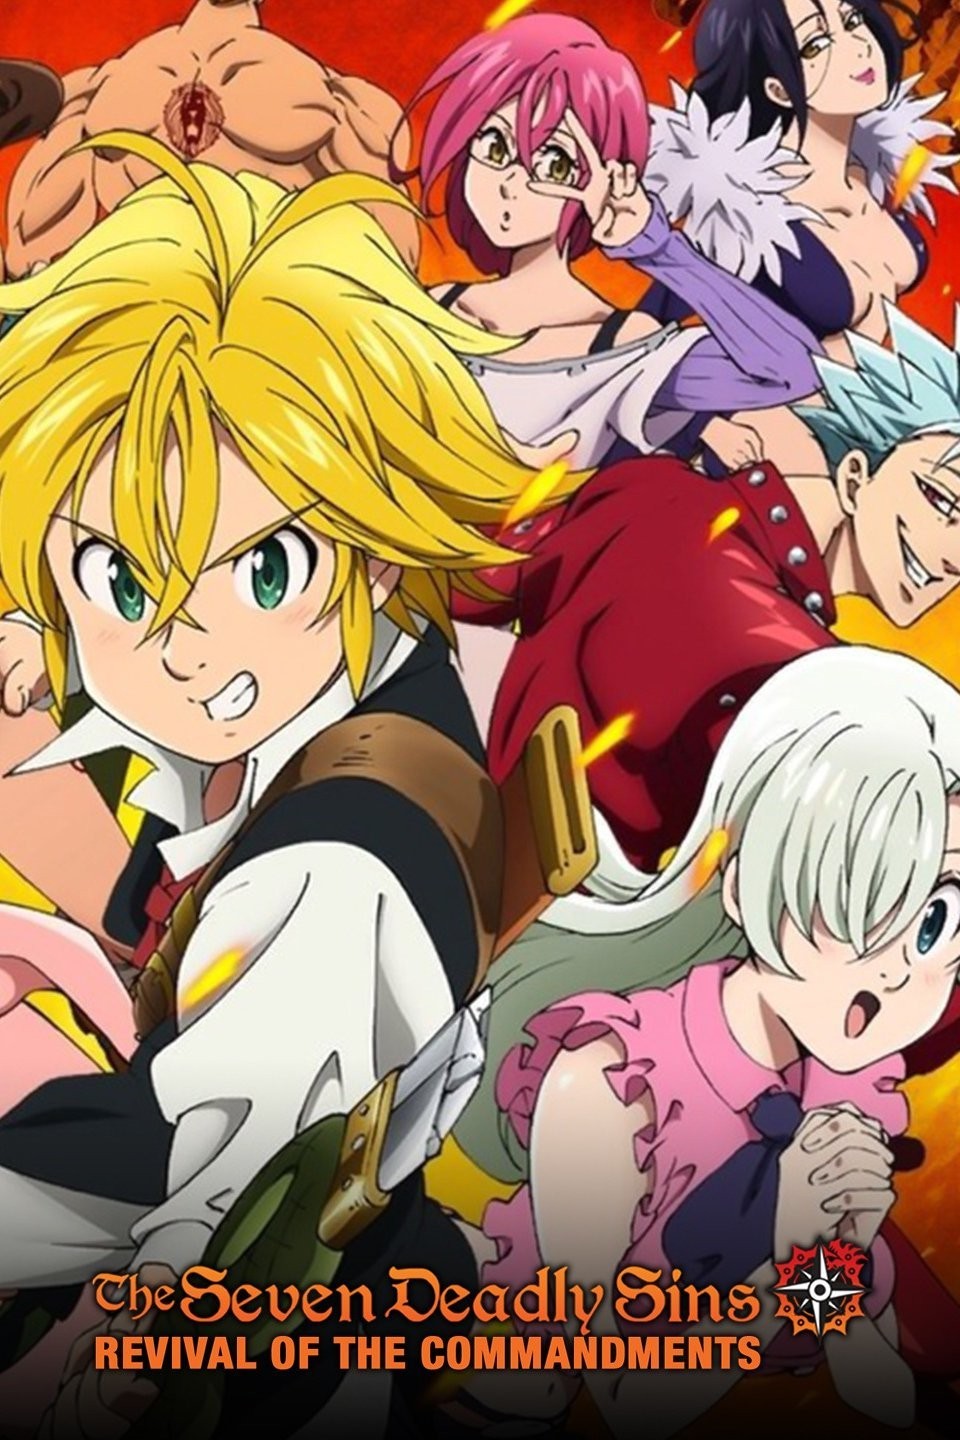 Time Bokan OVA Royal Revival Anime (DVD, 2014) BRAND NEW AND SEALED | eBay